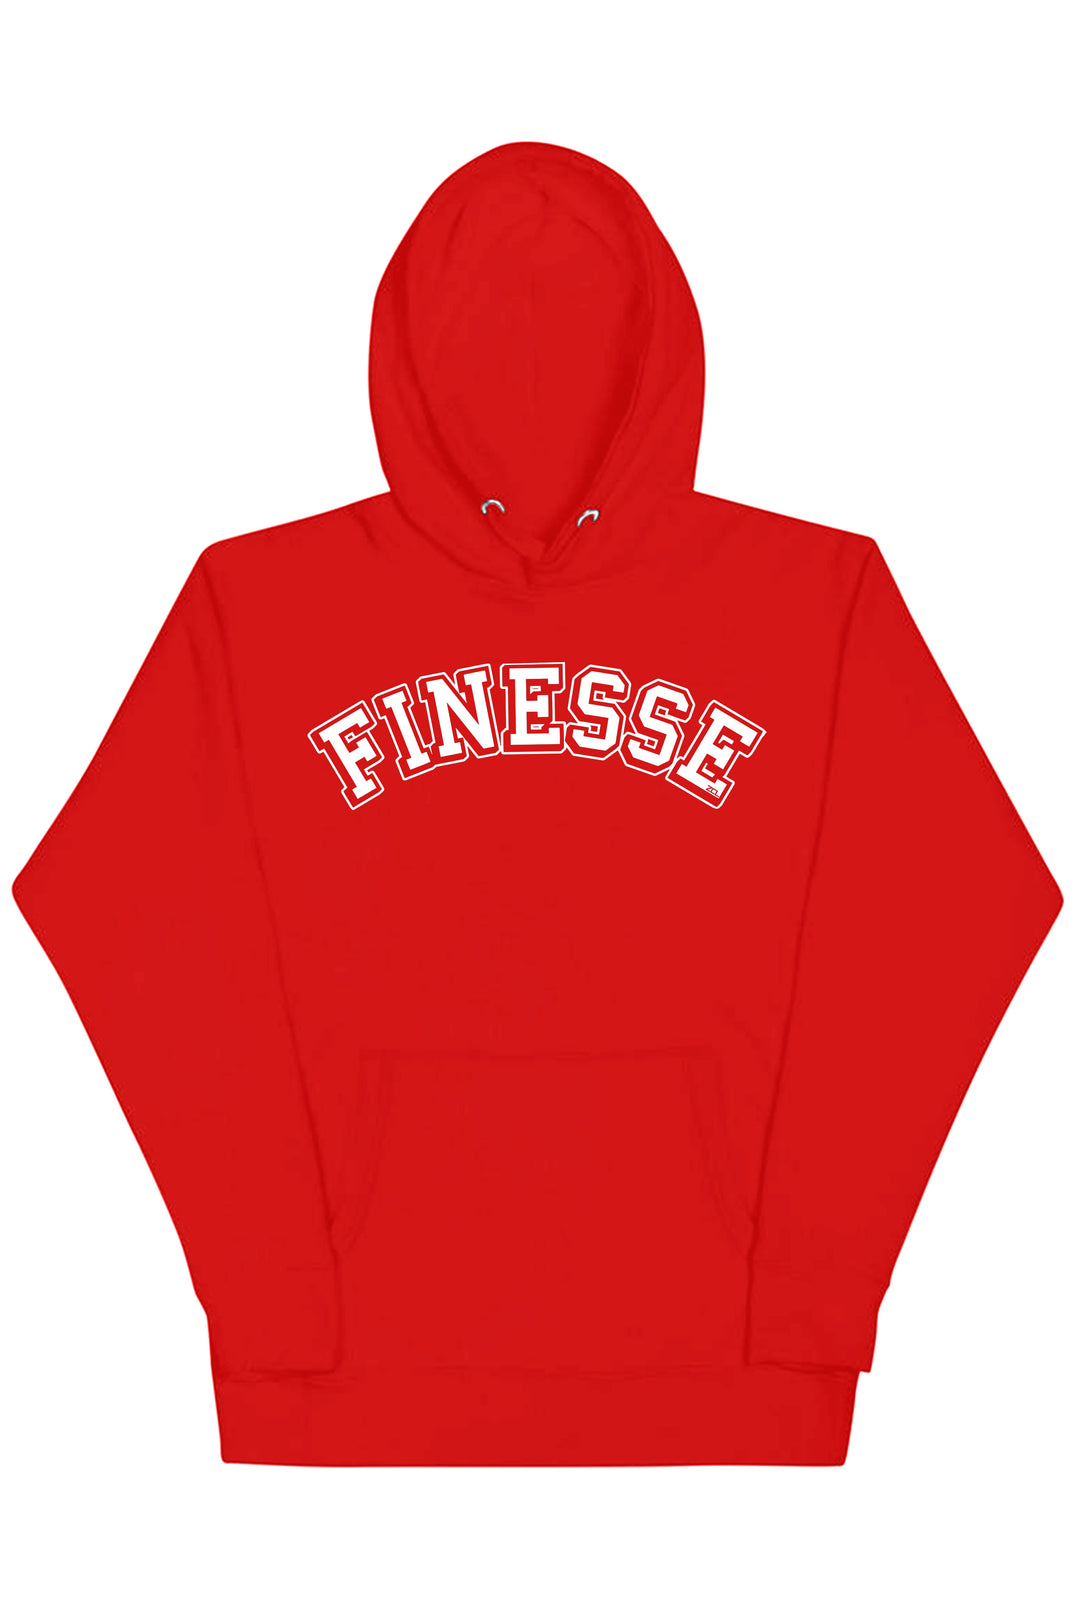 Finesse Hoodie (White Logo) - Zamage